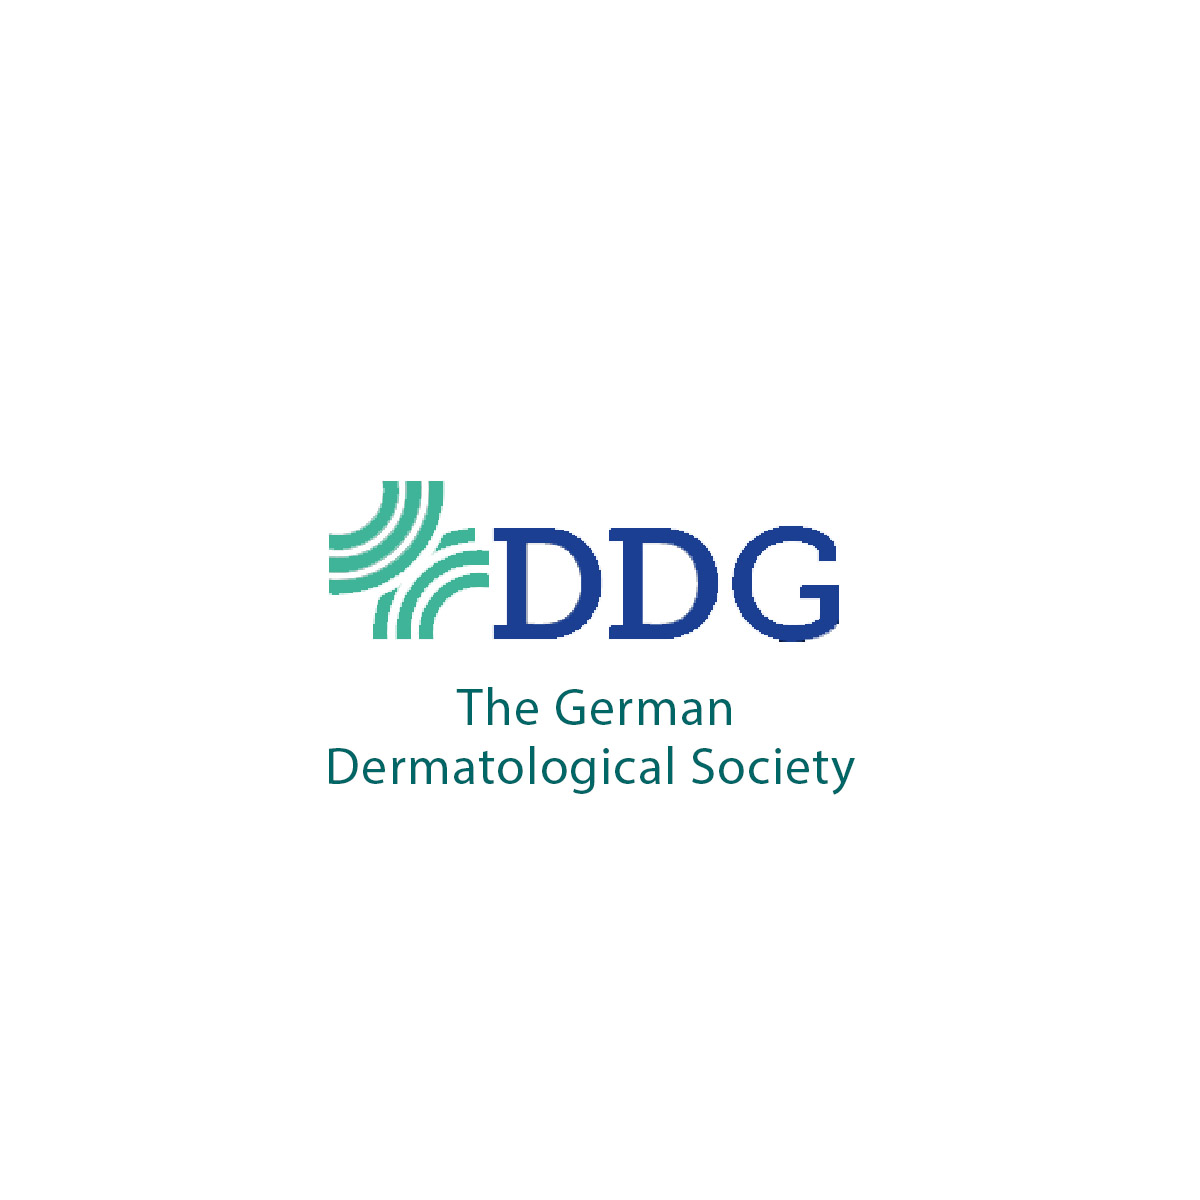 The German Dermatological Society (DDG)